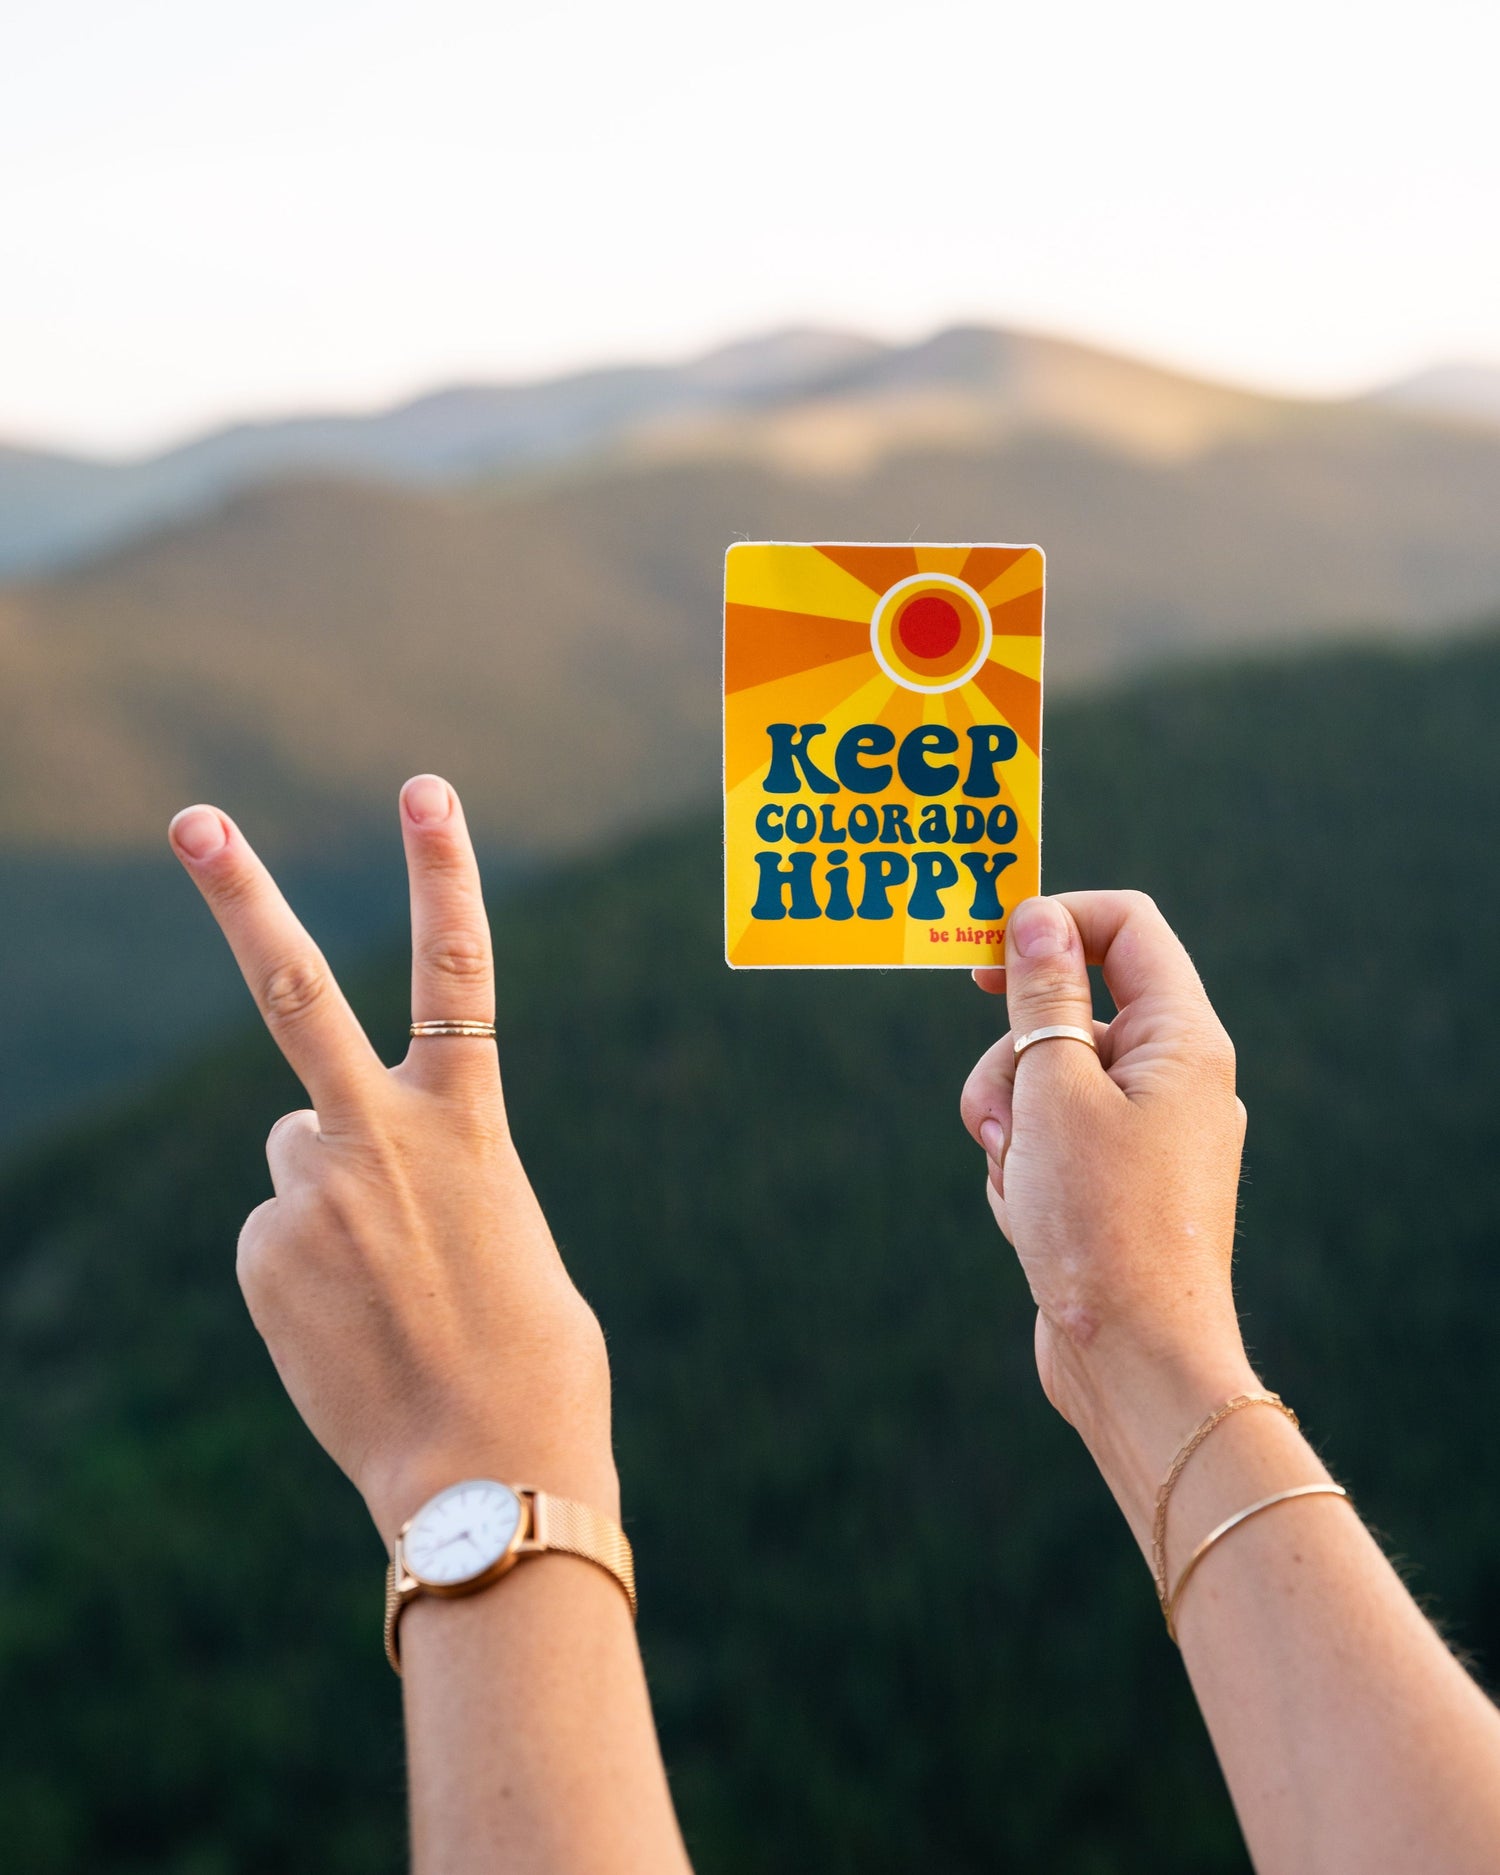 Keep Colorado Hippy Sticker